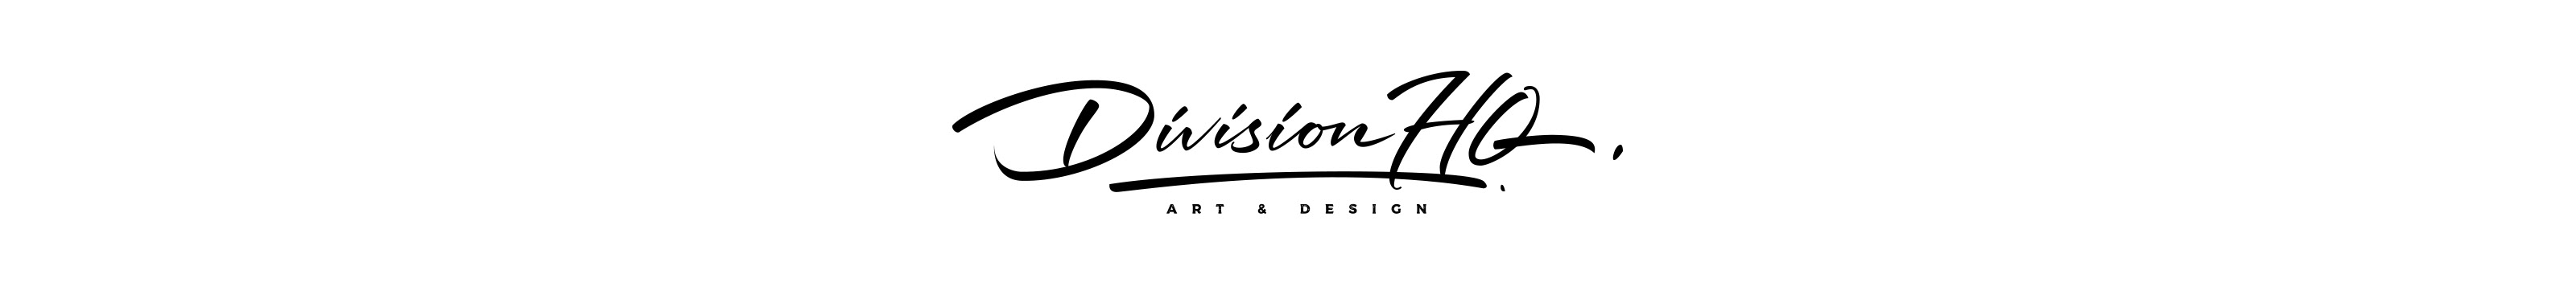 DIVISION HQ's profile banner